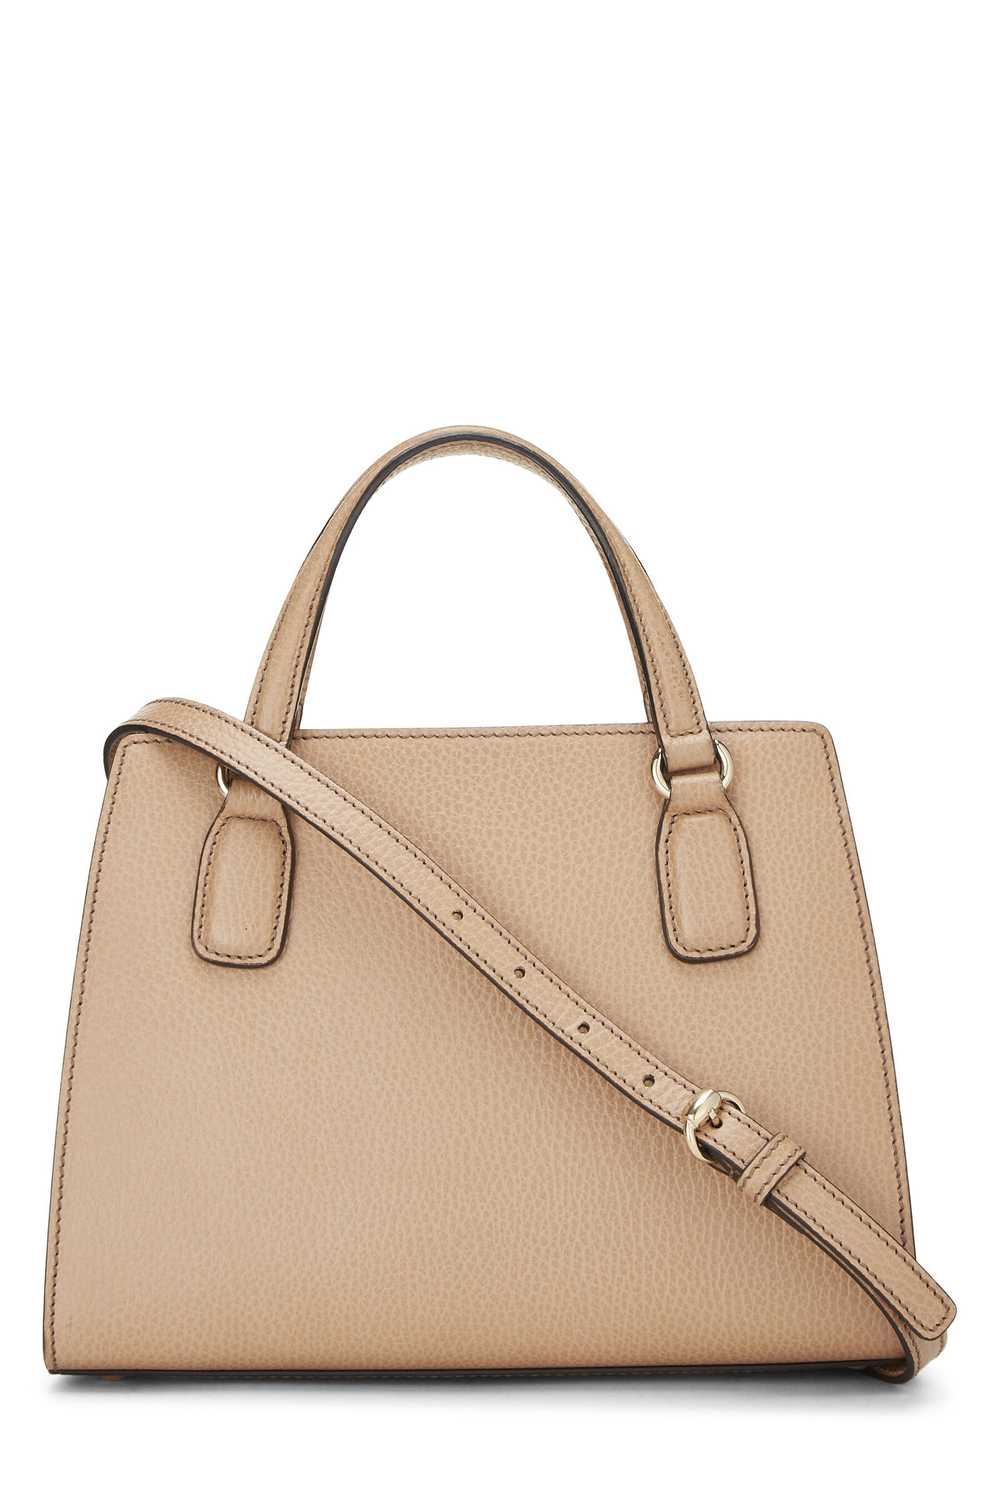 Beige Grained Leather Soho Handbag - image 4